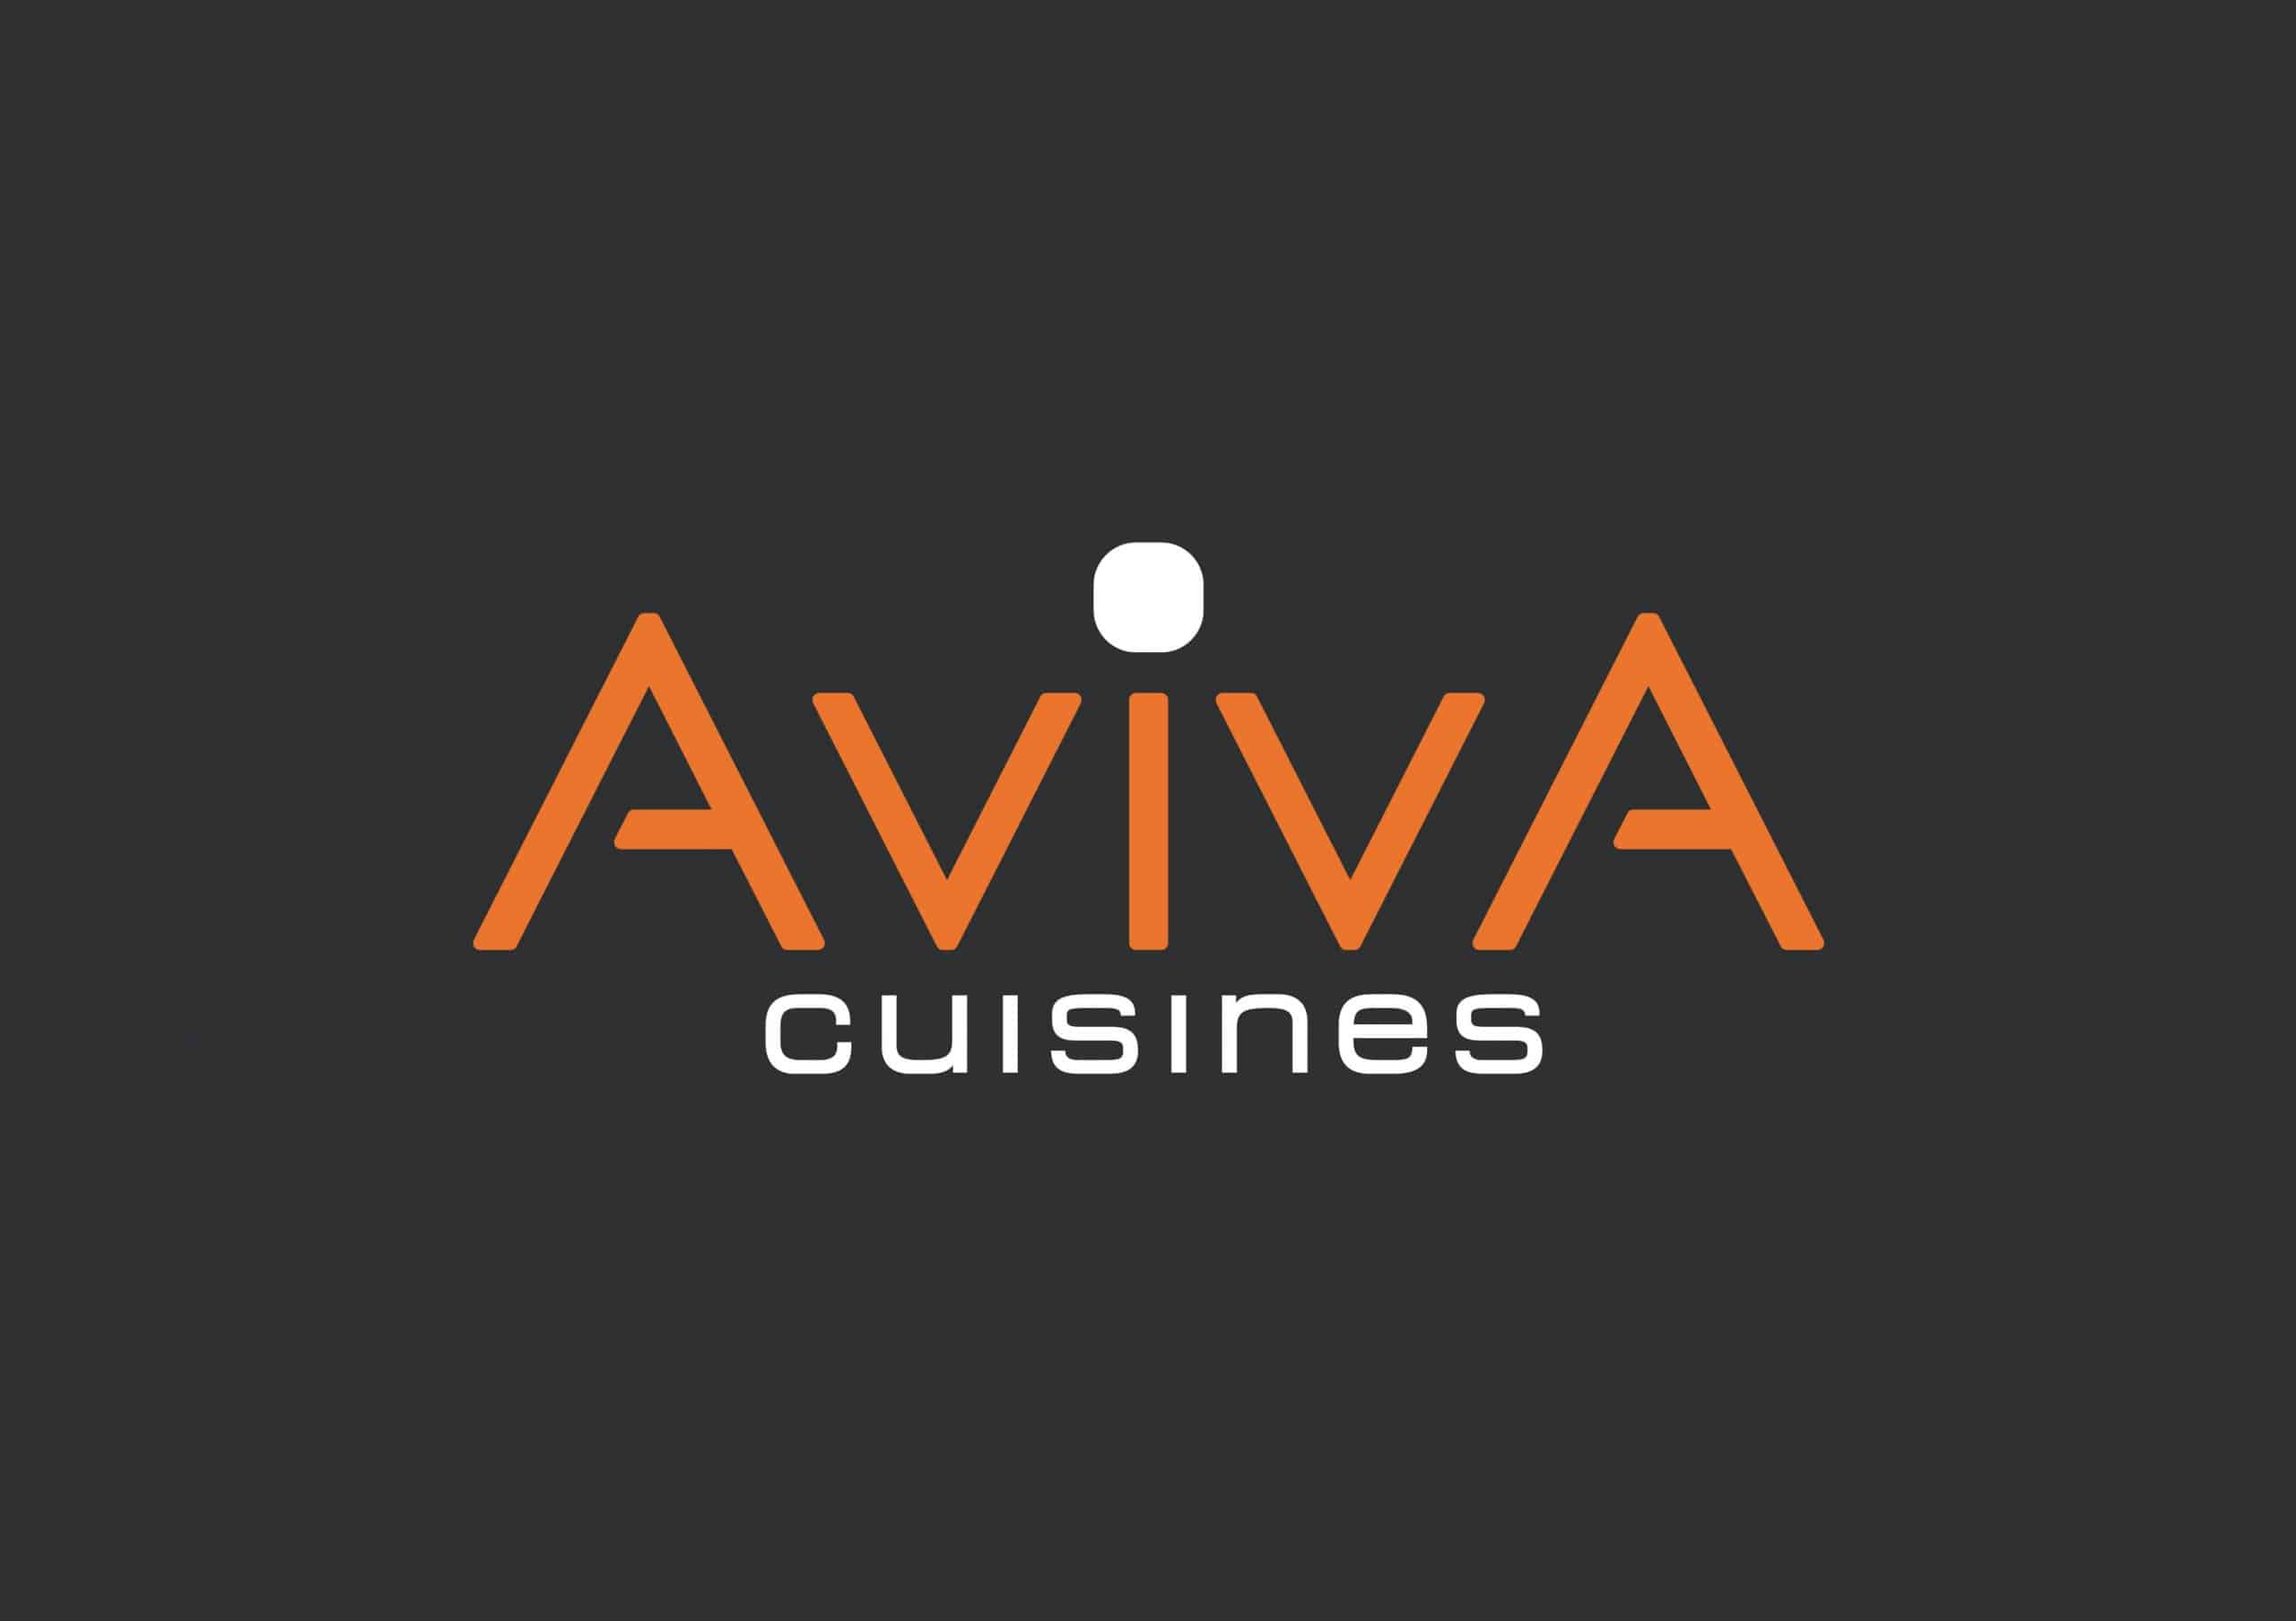 Cuisines Aviva : professionnalisme et qualité